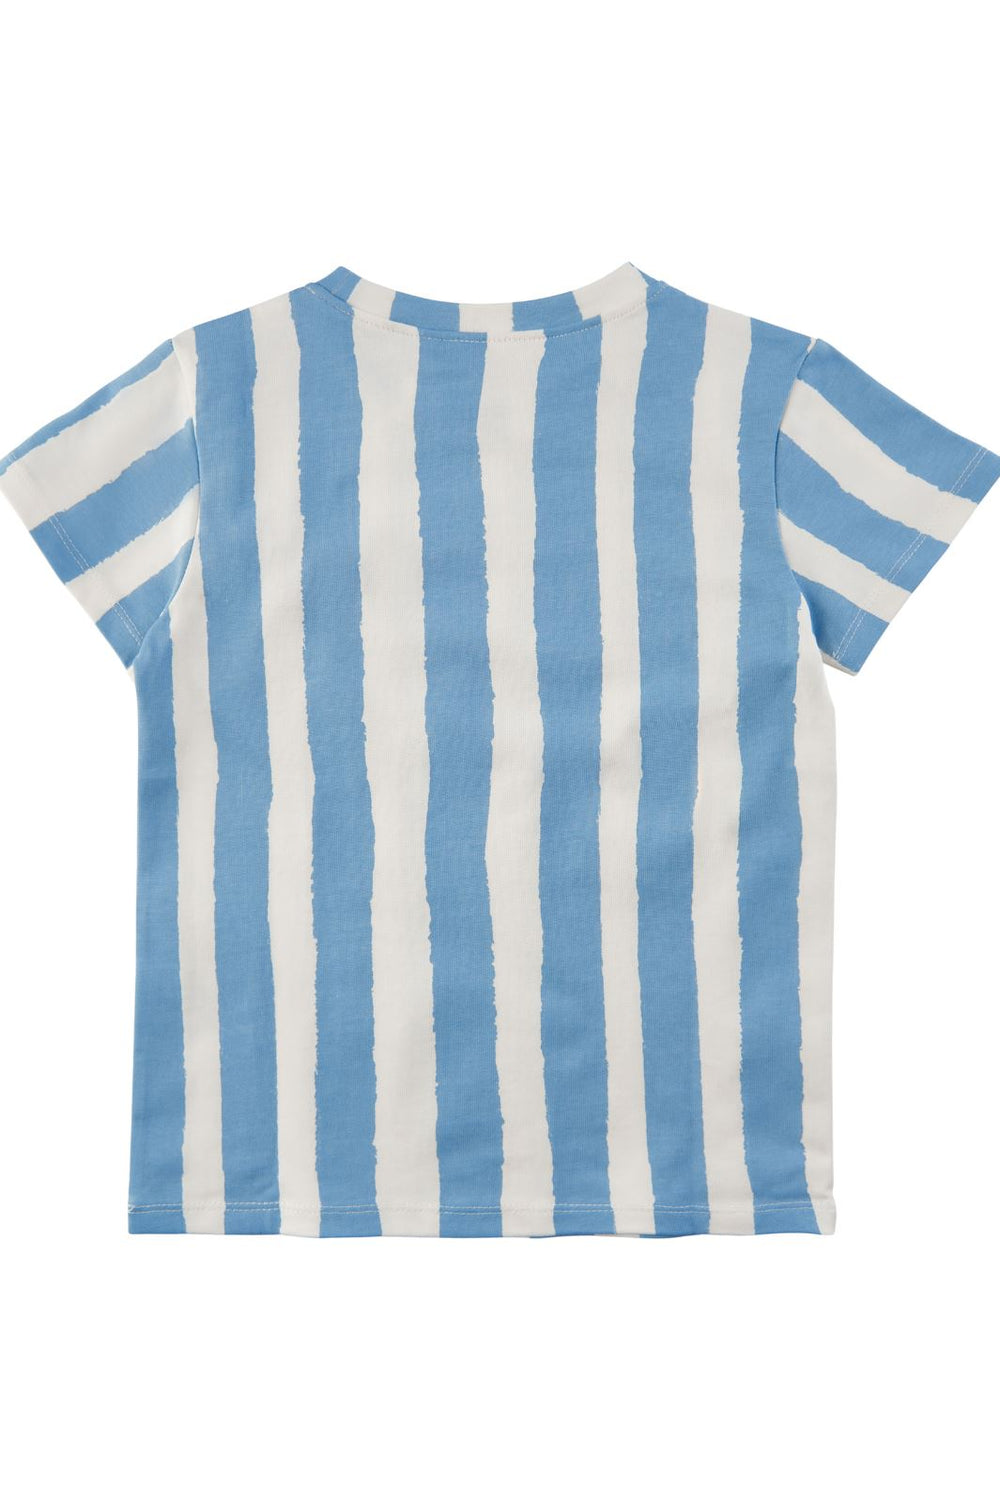 Soft Gallery - SGBass stripes ss tee - Gardenia T-shirts 